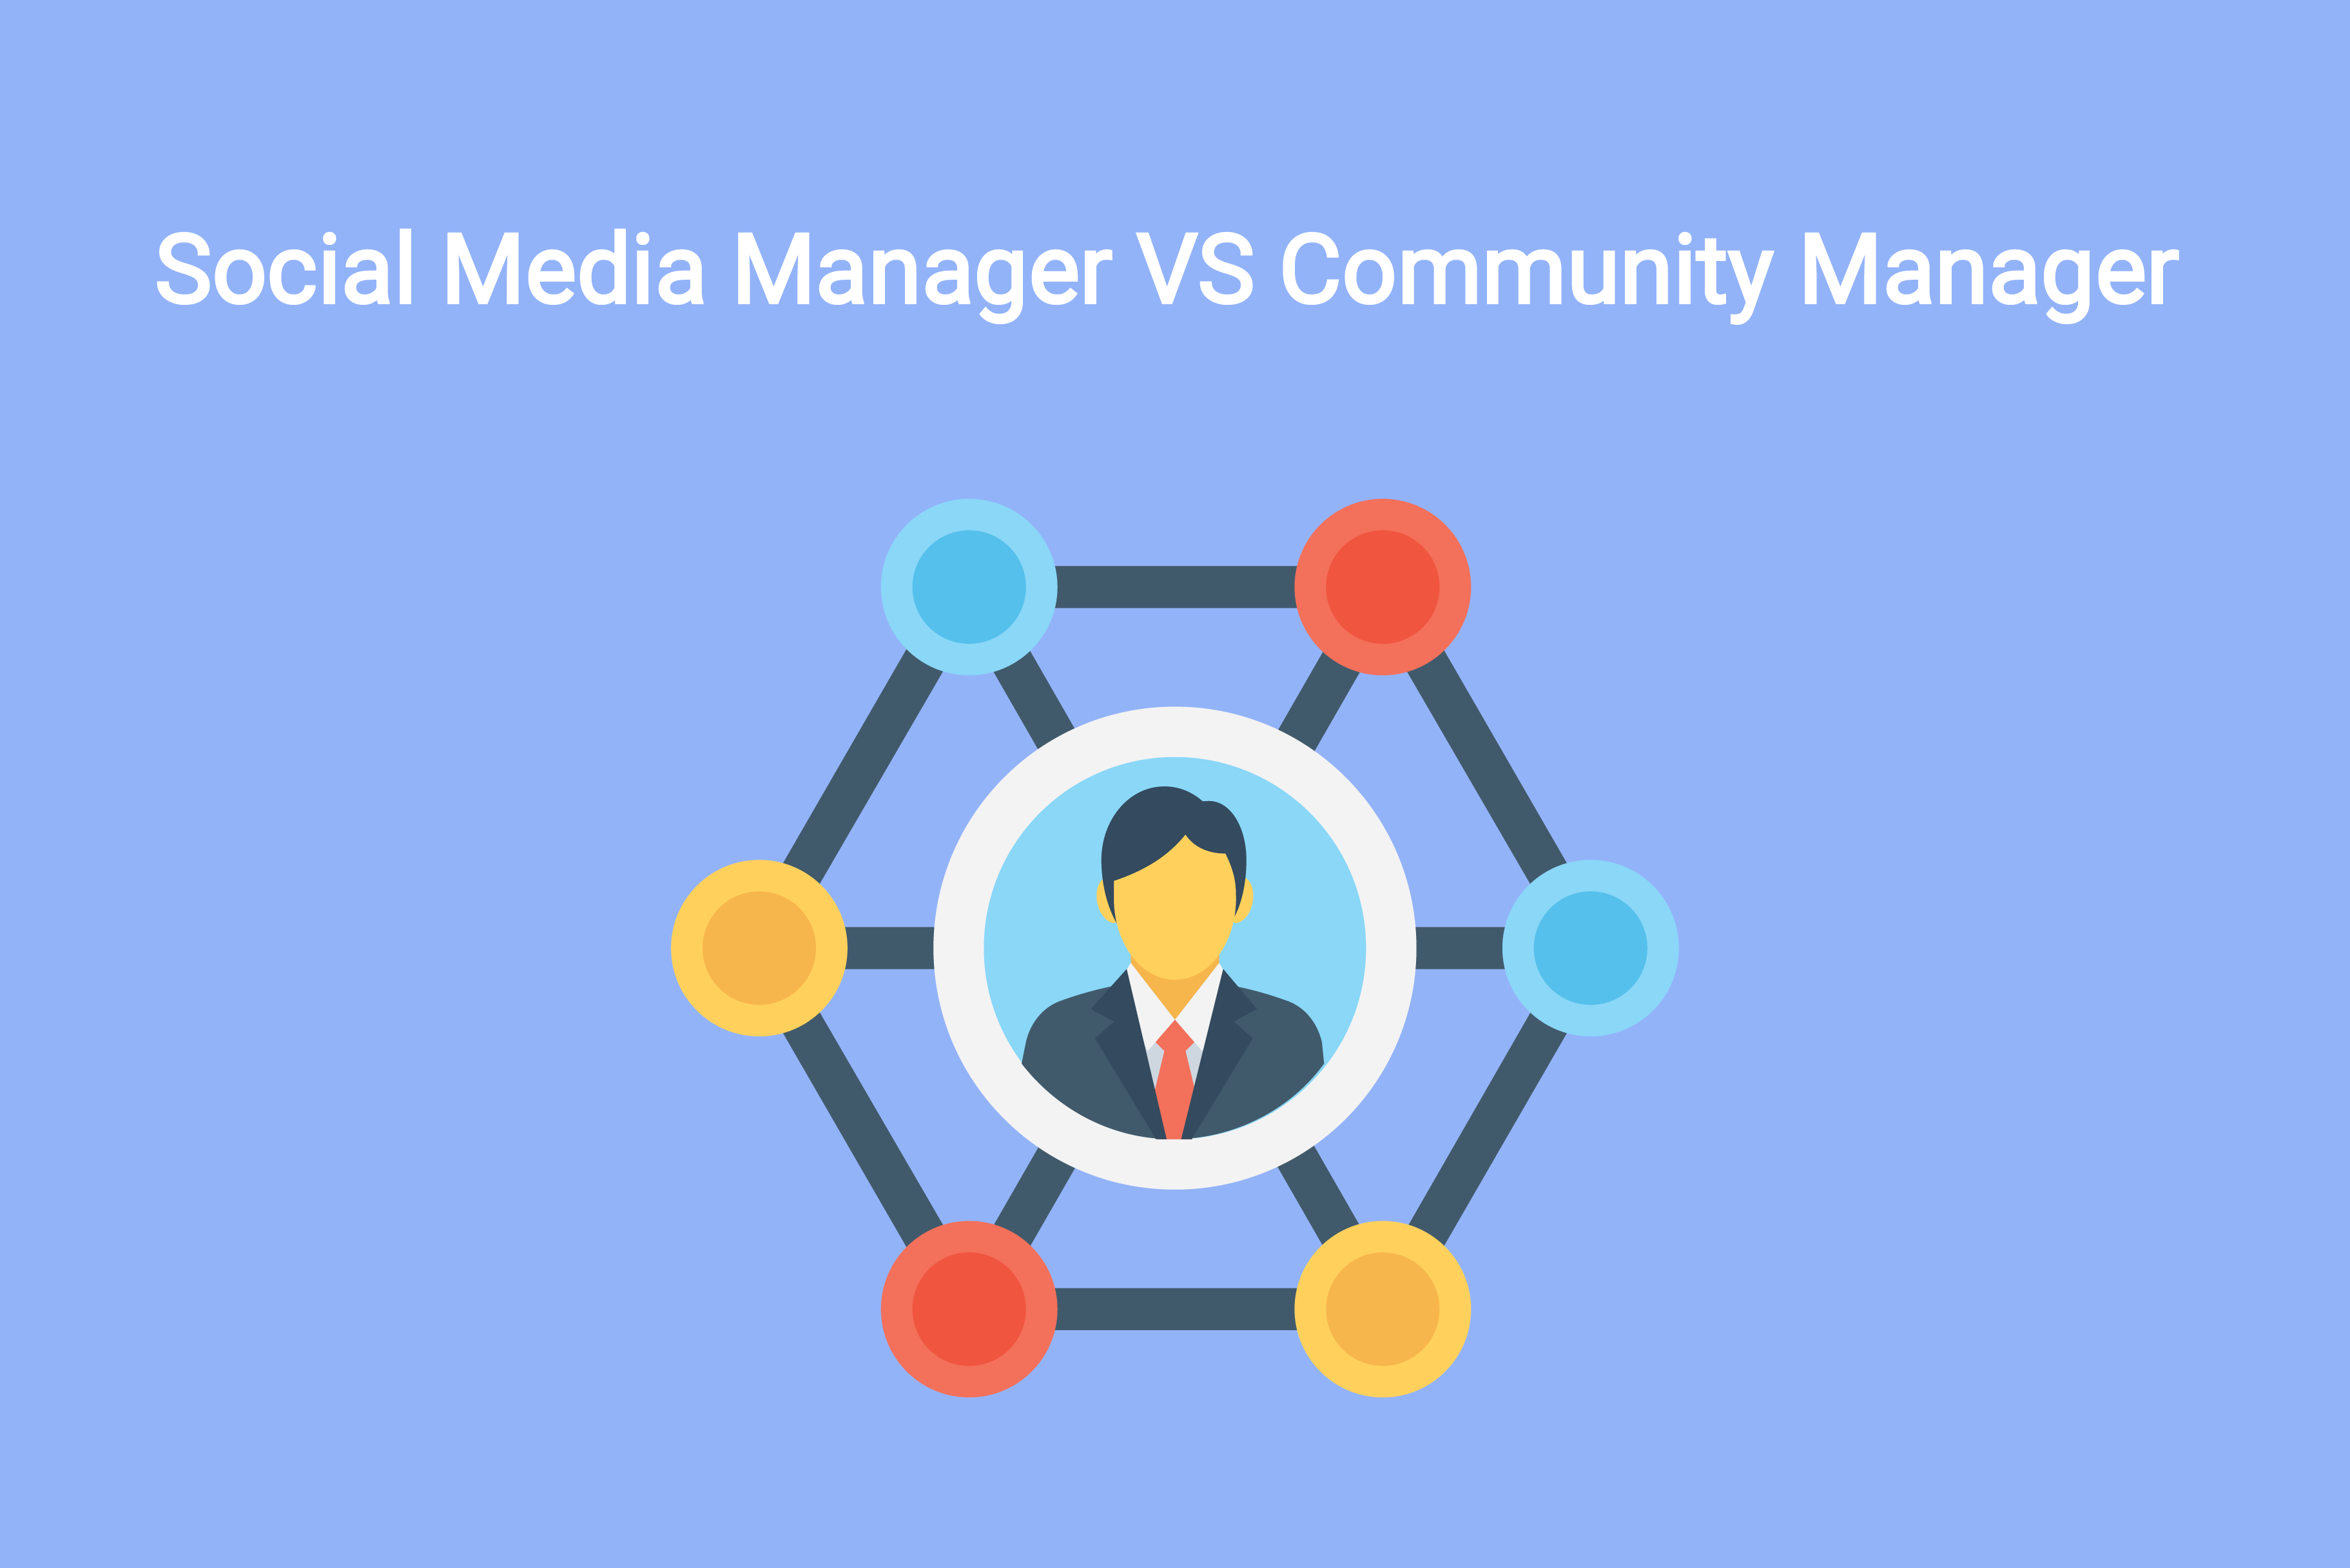 Social Media Manager vs Community Manager